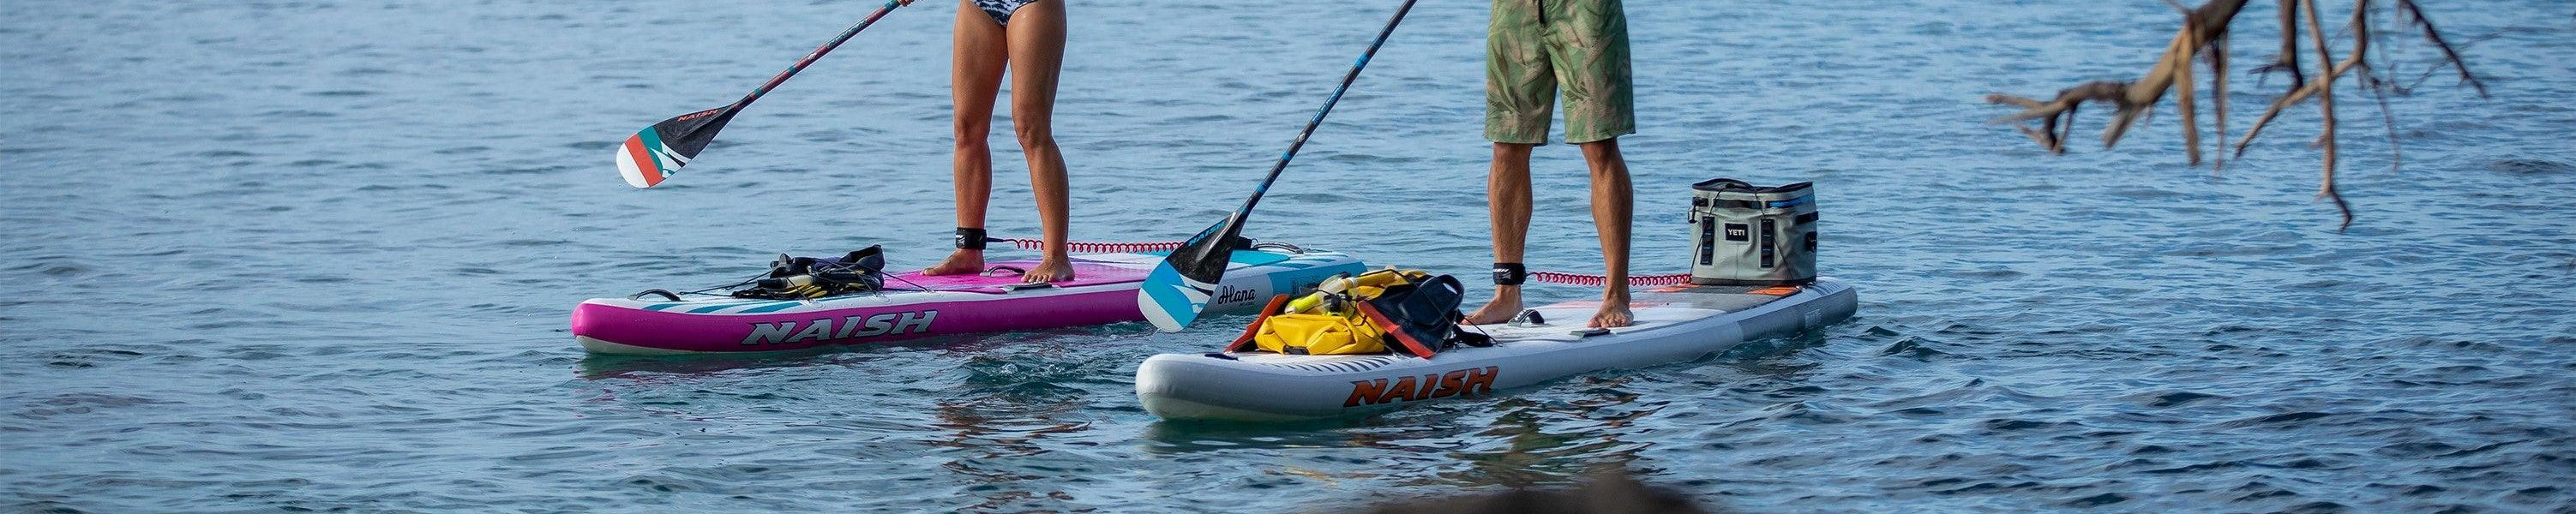 Inflatable SUP SALE - Naish.com